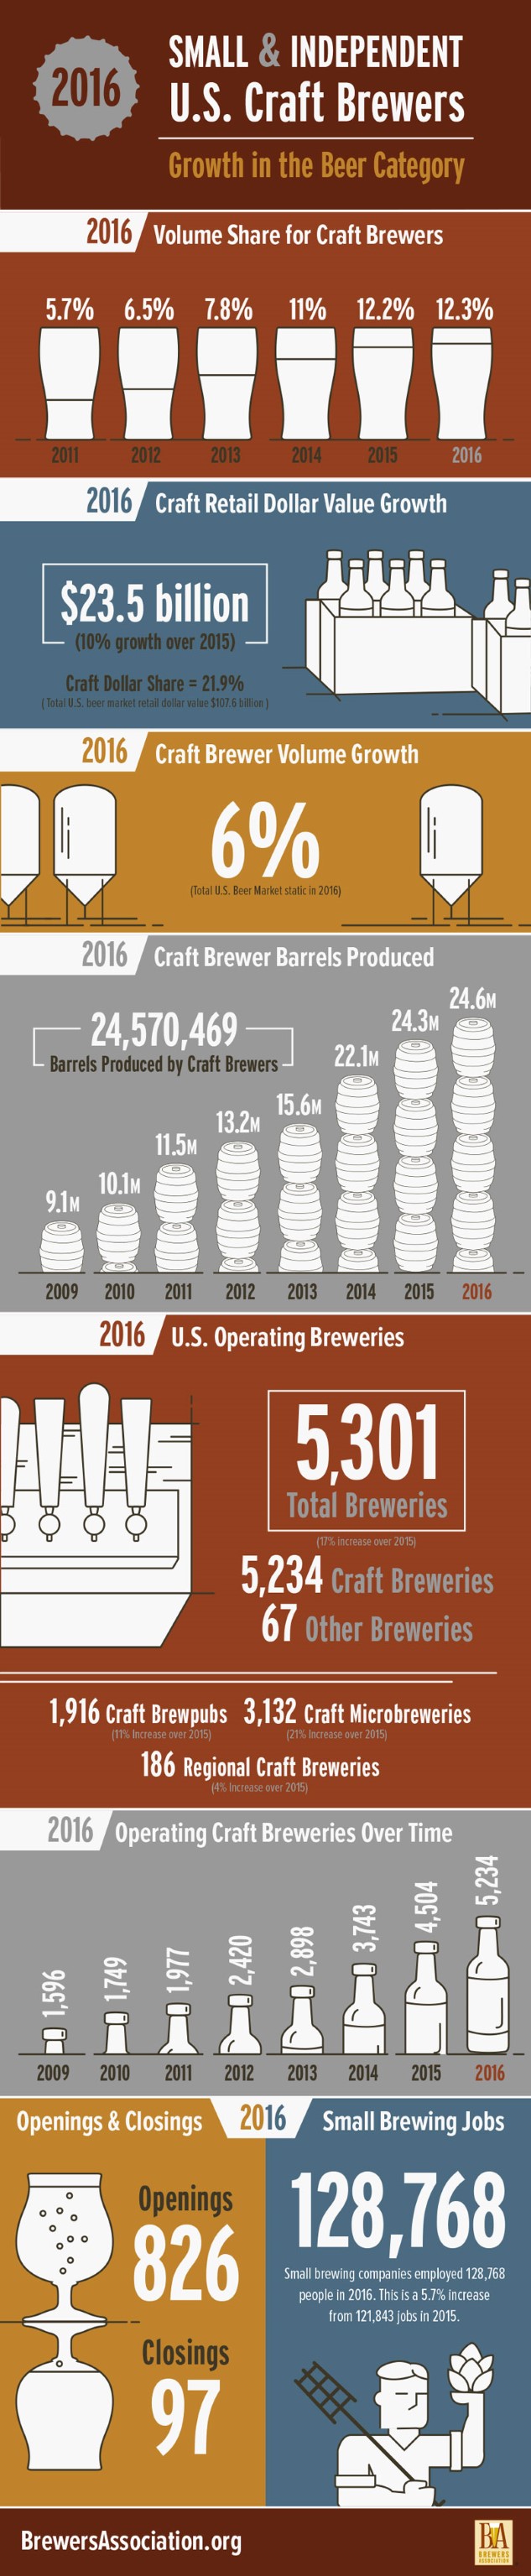 2016 brewers stats.jpg